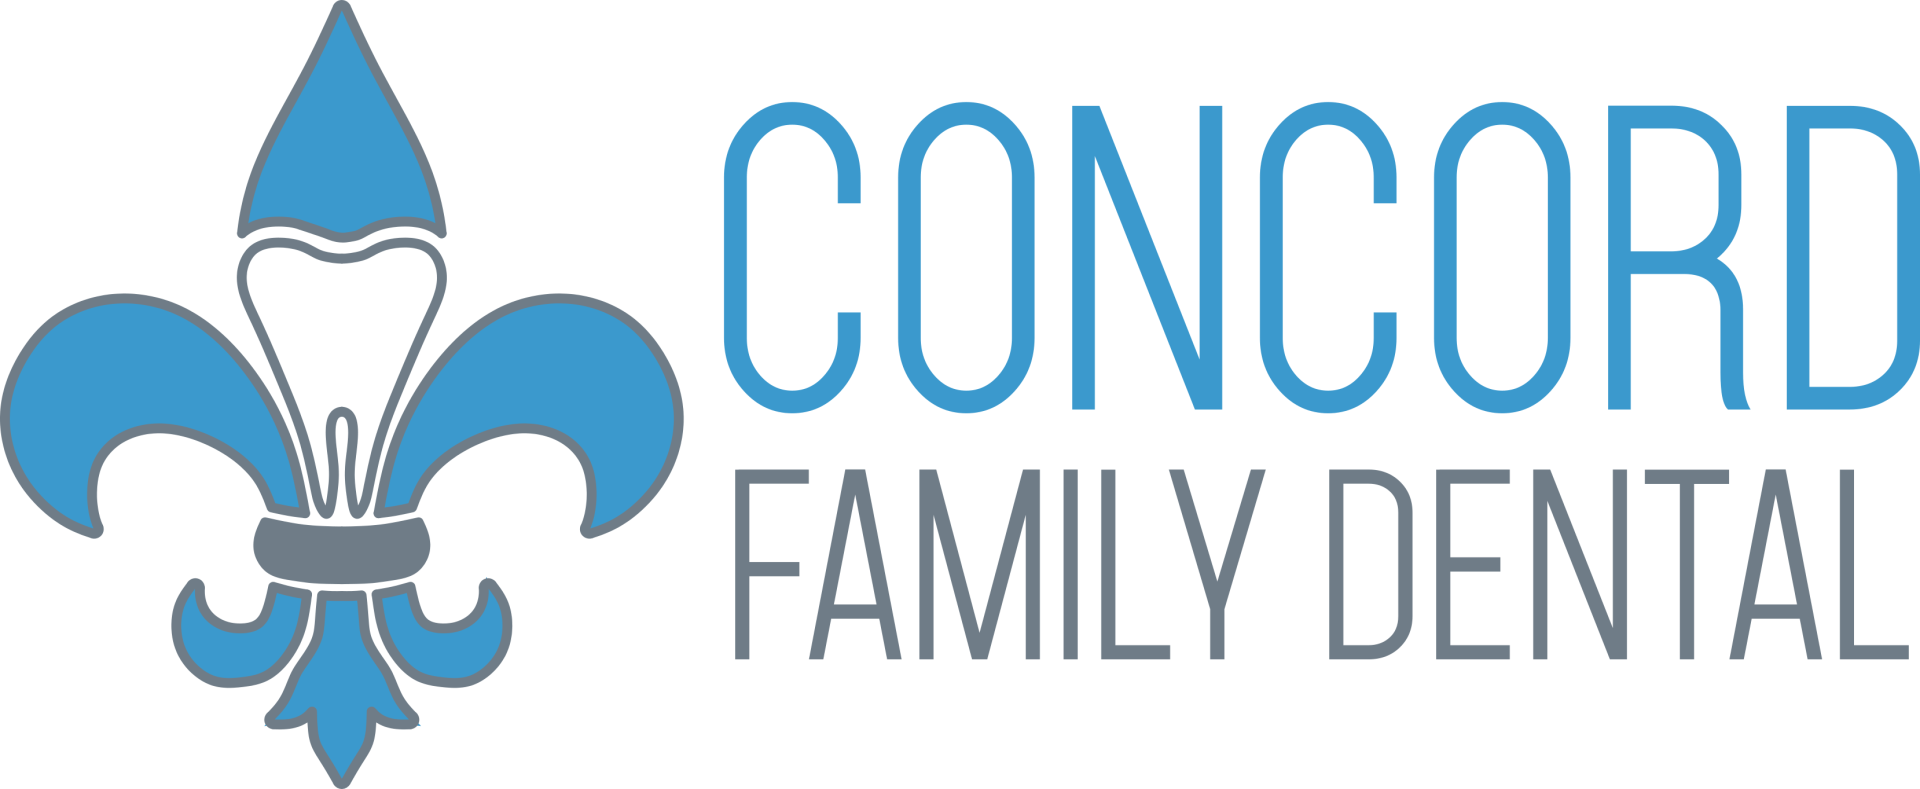 Concord Family Dental Logo | Top Same Day Emergency Family Dentist in Baton Rouge LA 70818